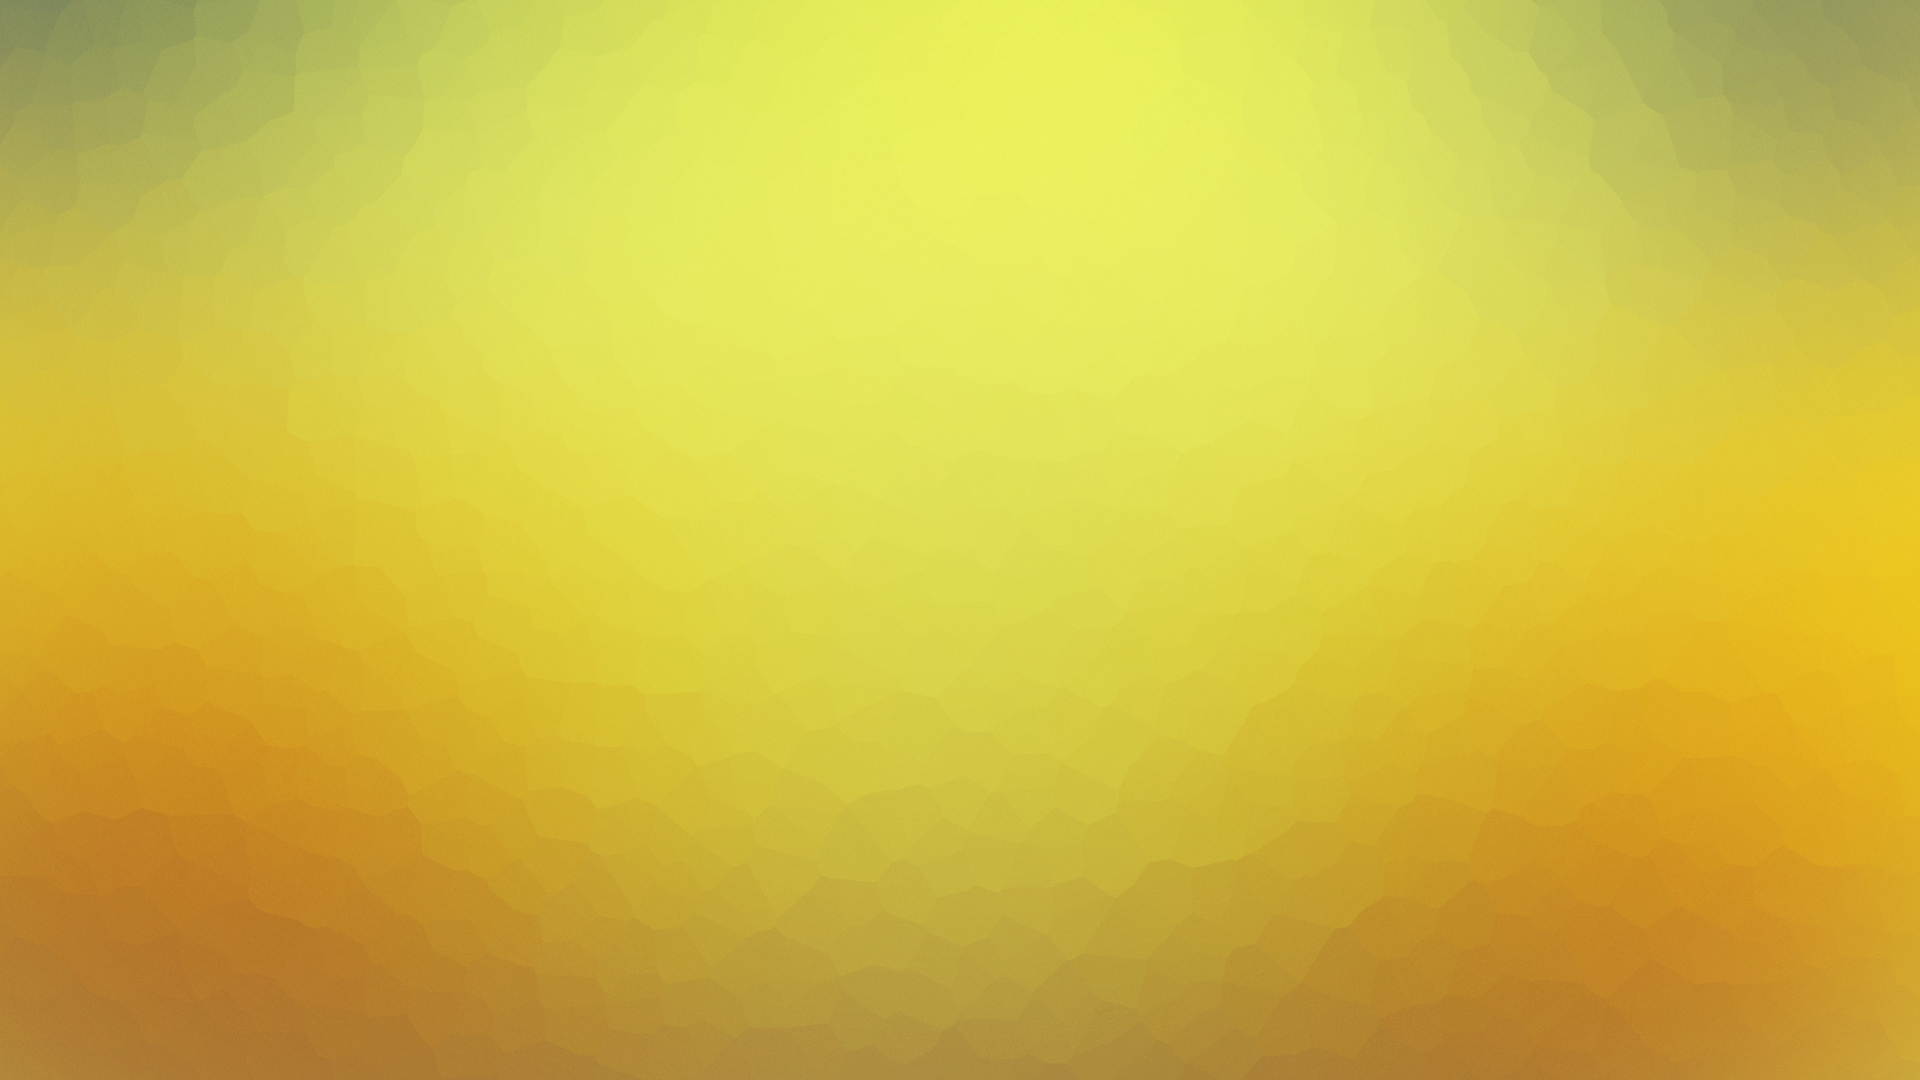 General 1920x1080 minimalism yellow background texture